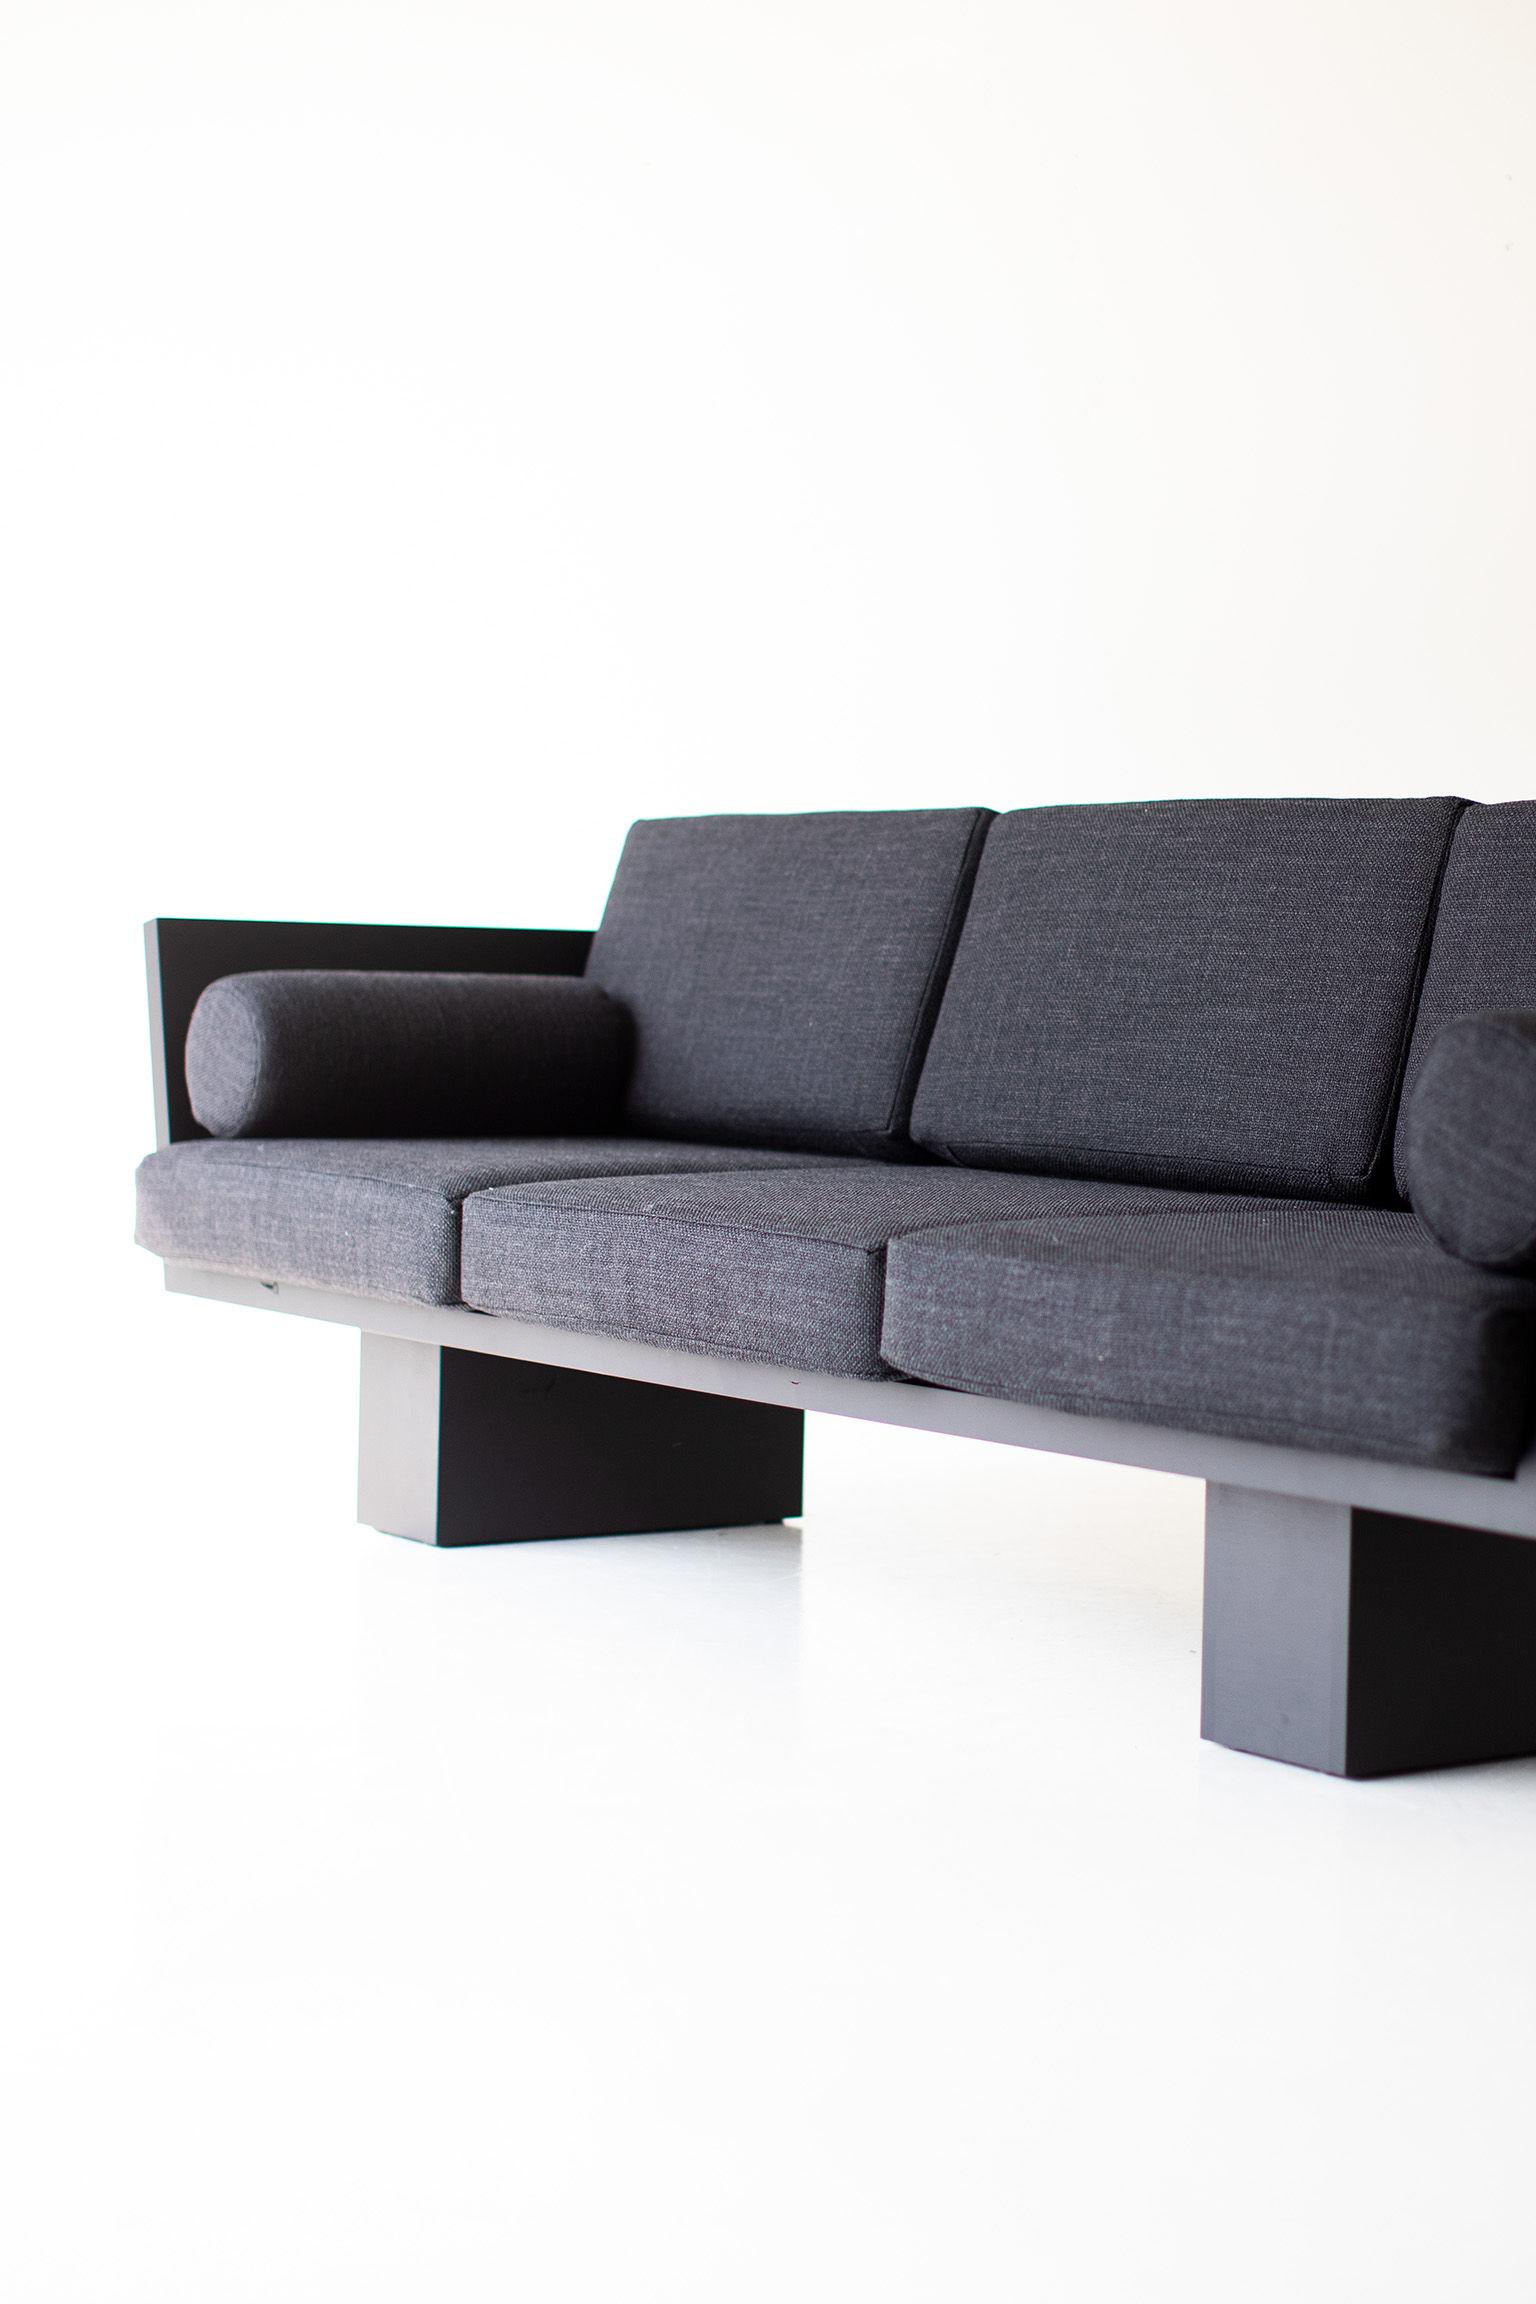 modern black sofas